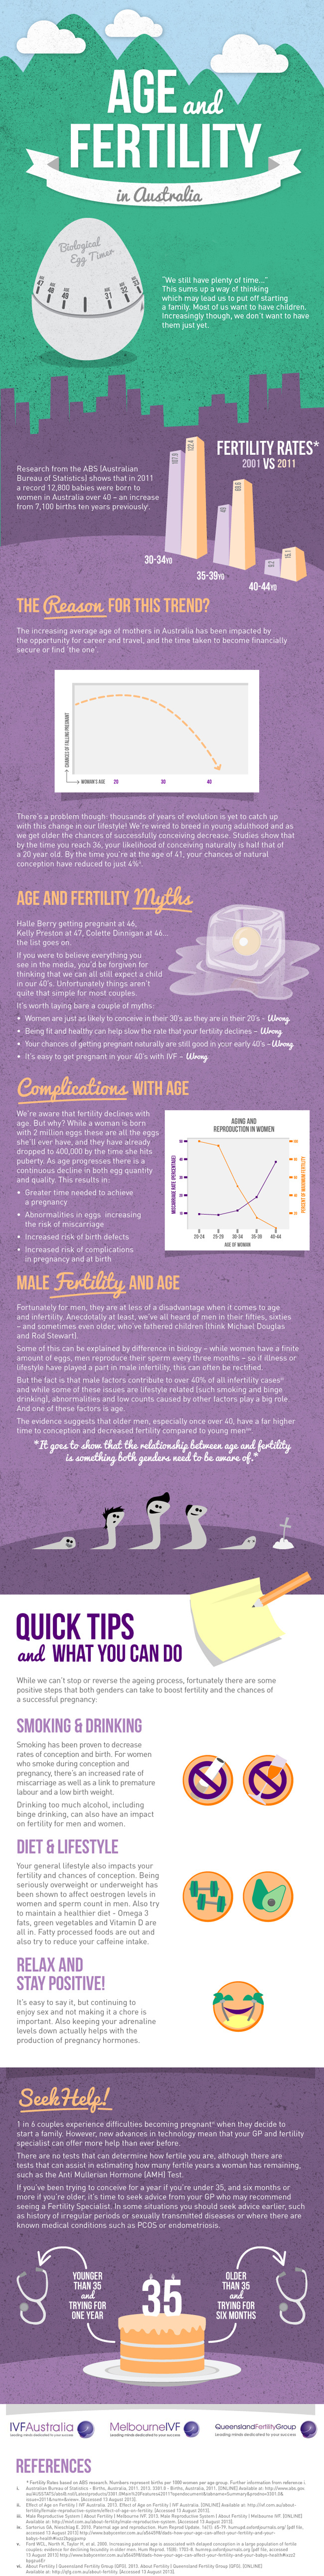 Fertility in Australia infographic